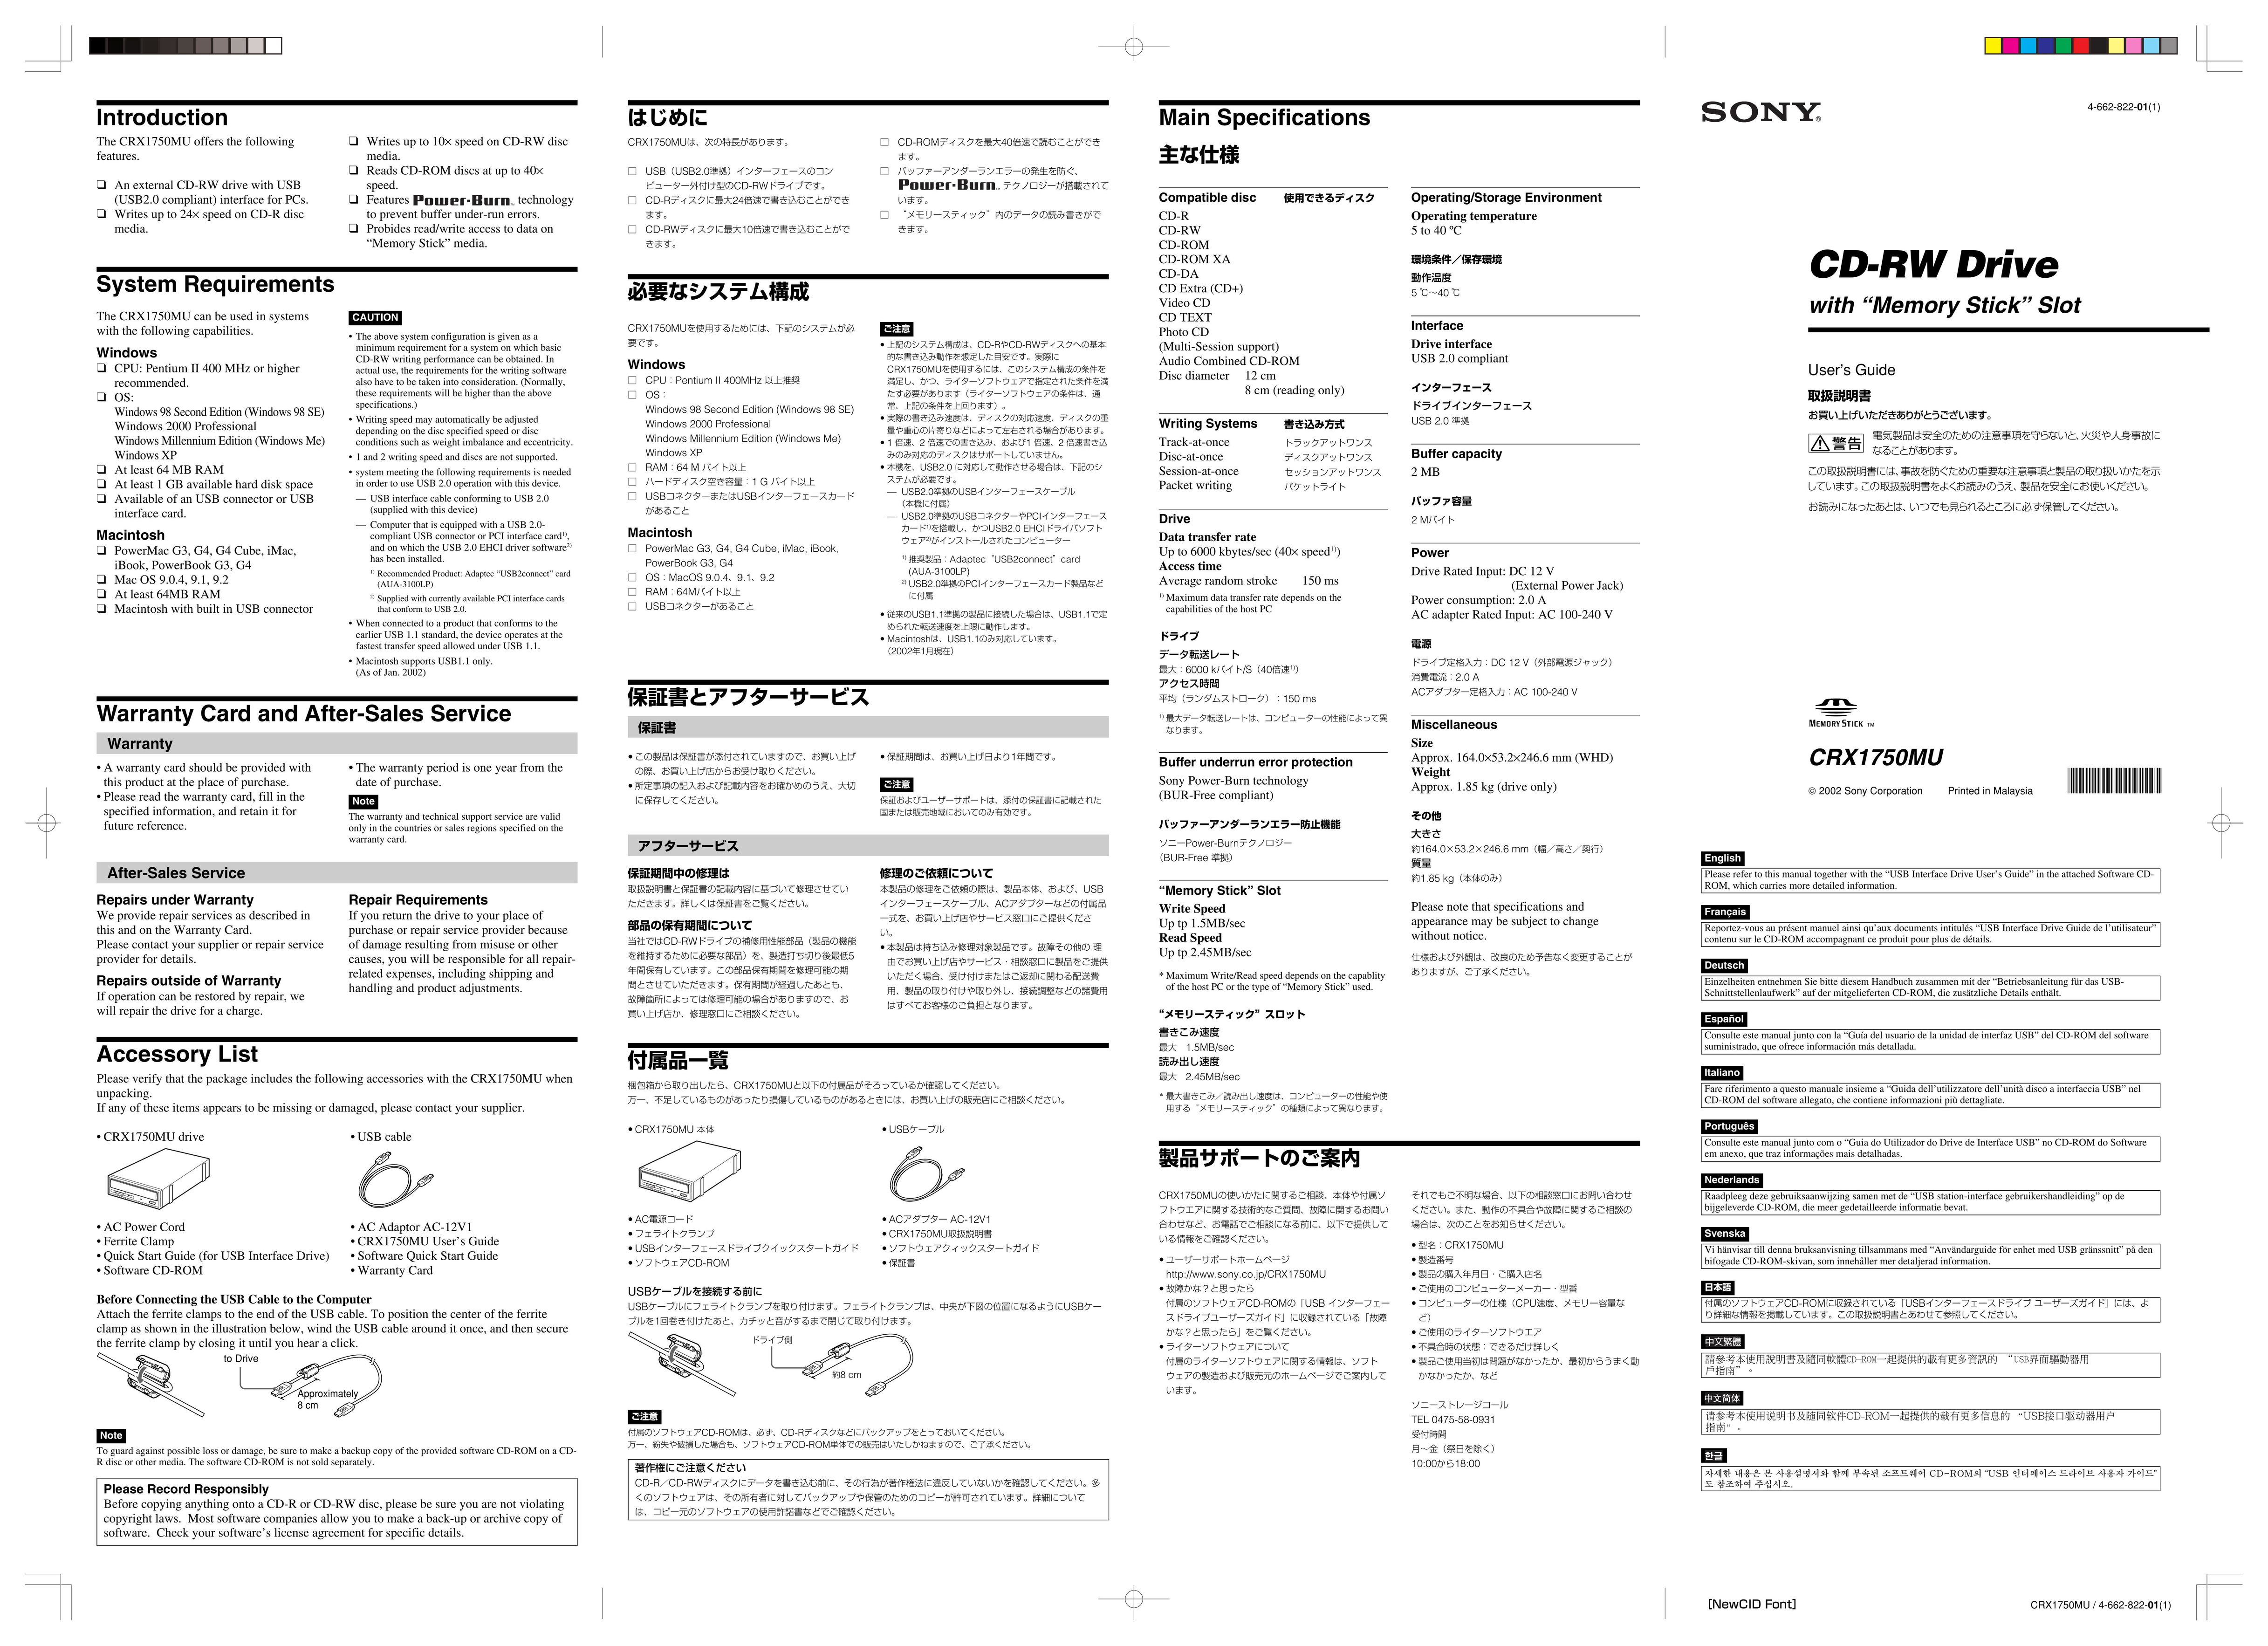 Sony CRX1750MU Computer Drive User Manual